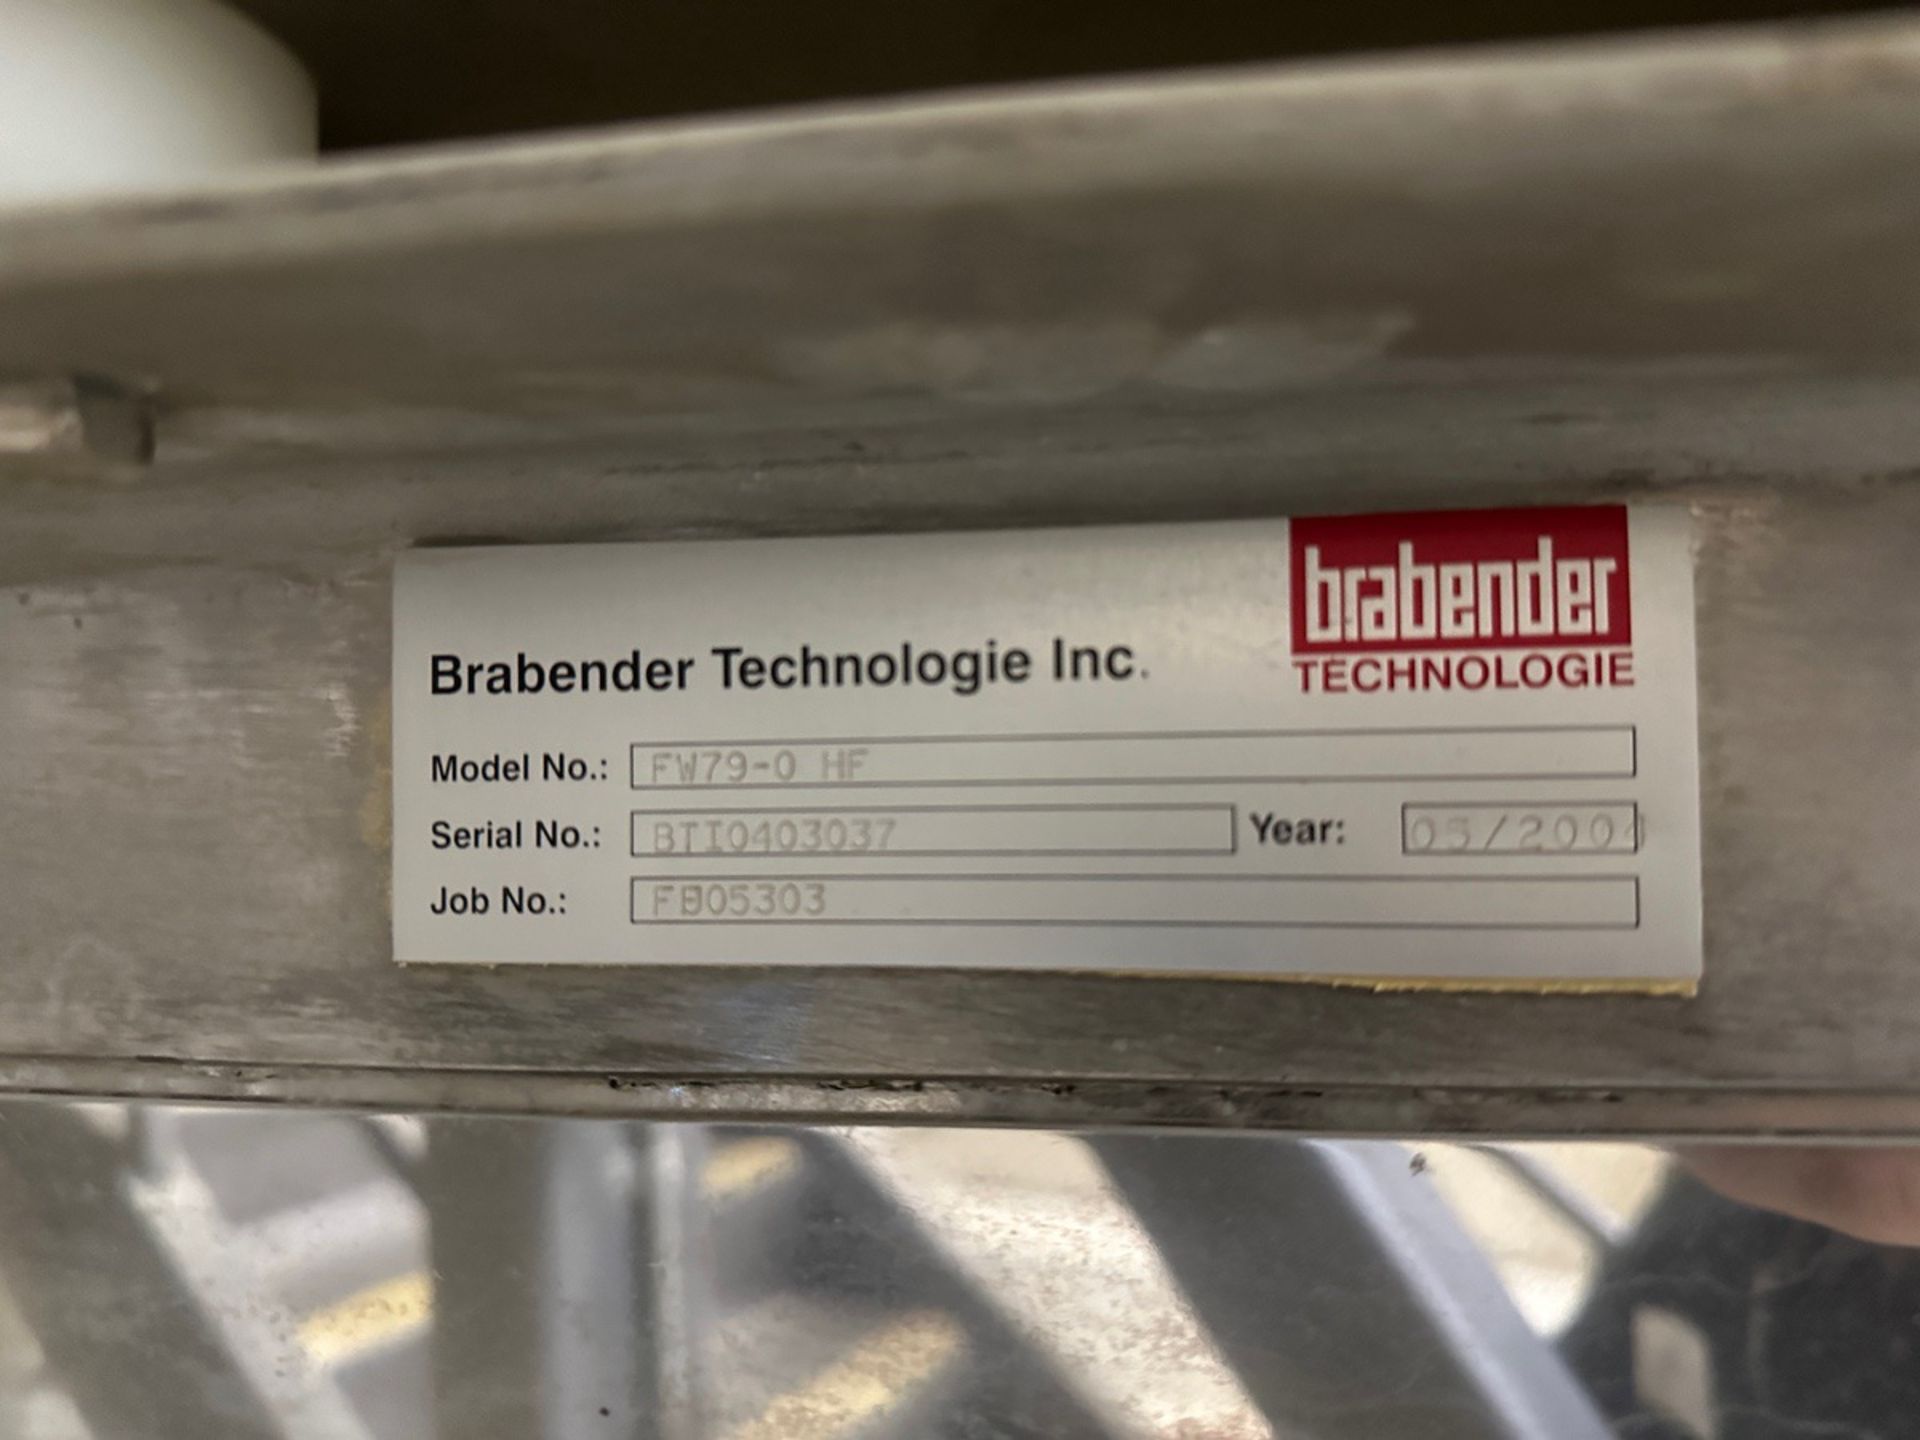 Brabender Stainless Steel Ingredient Hopper - Model FW79-0 HF, S/N BT - Subj to Bulk | Rig Fee $1000 - Image 6 of 6